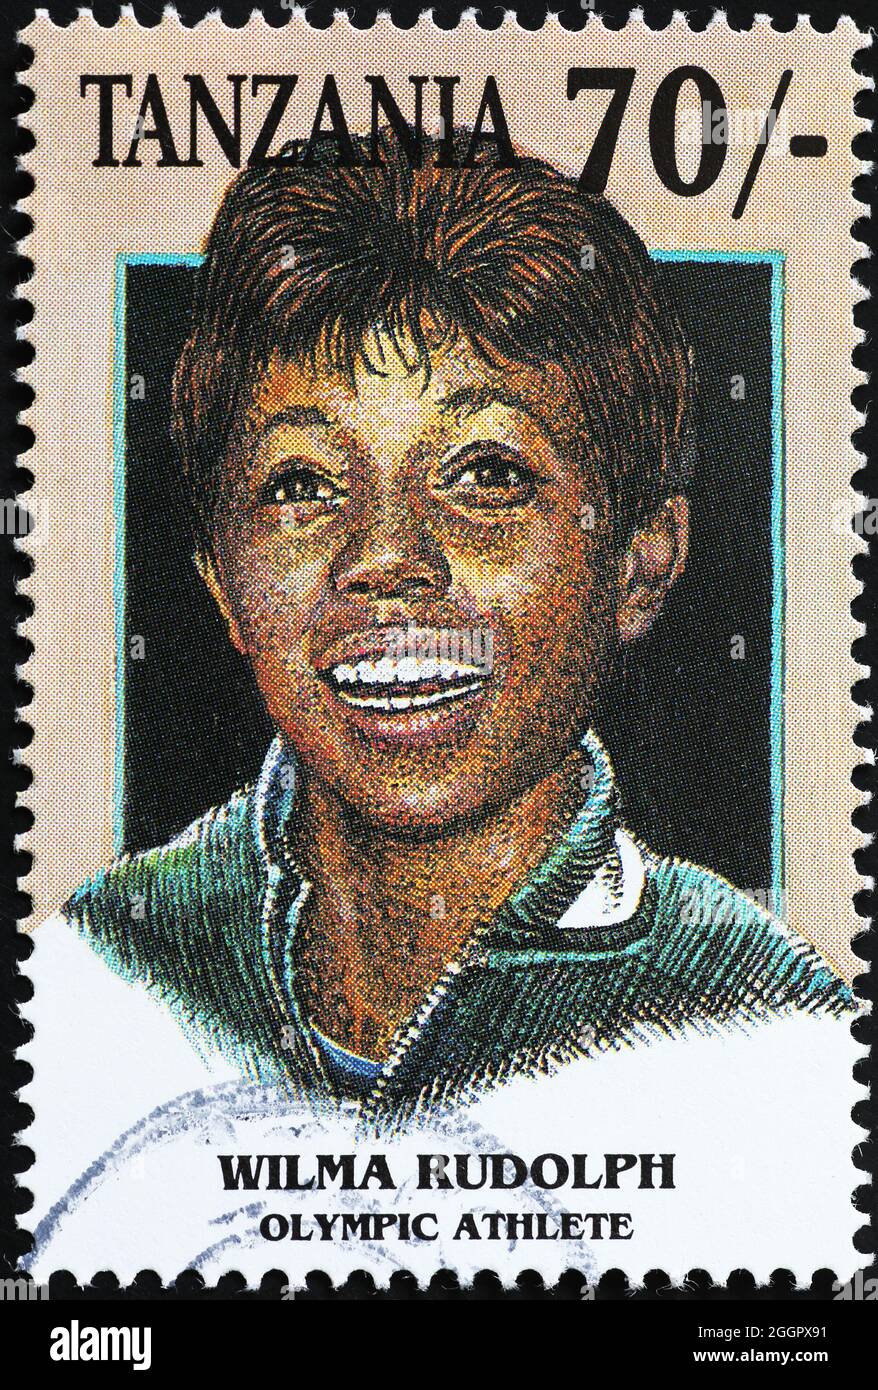 Wilma Rudolph portrait on postage stamp Stock Photo